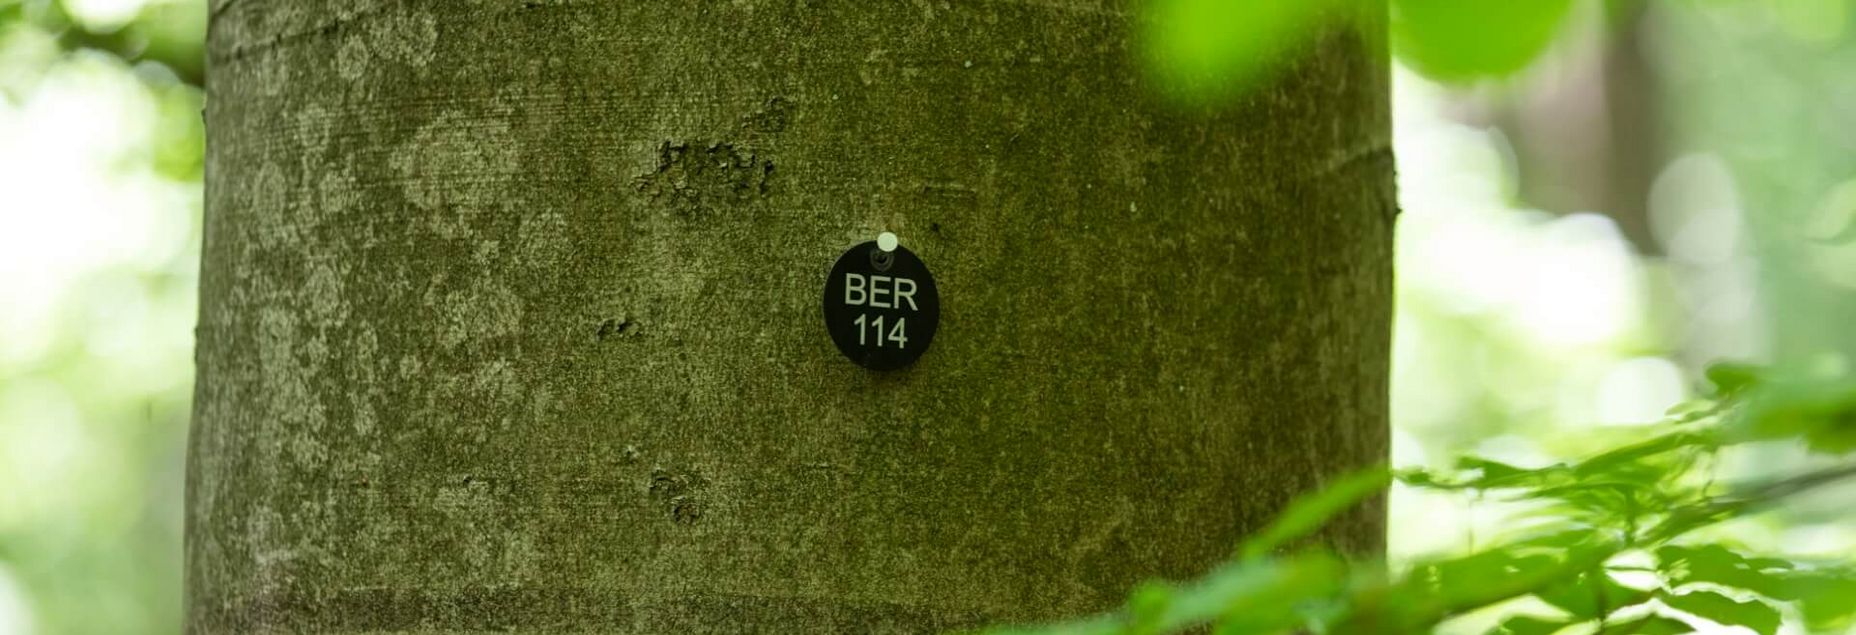 Baum BER 114 - Plakette